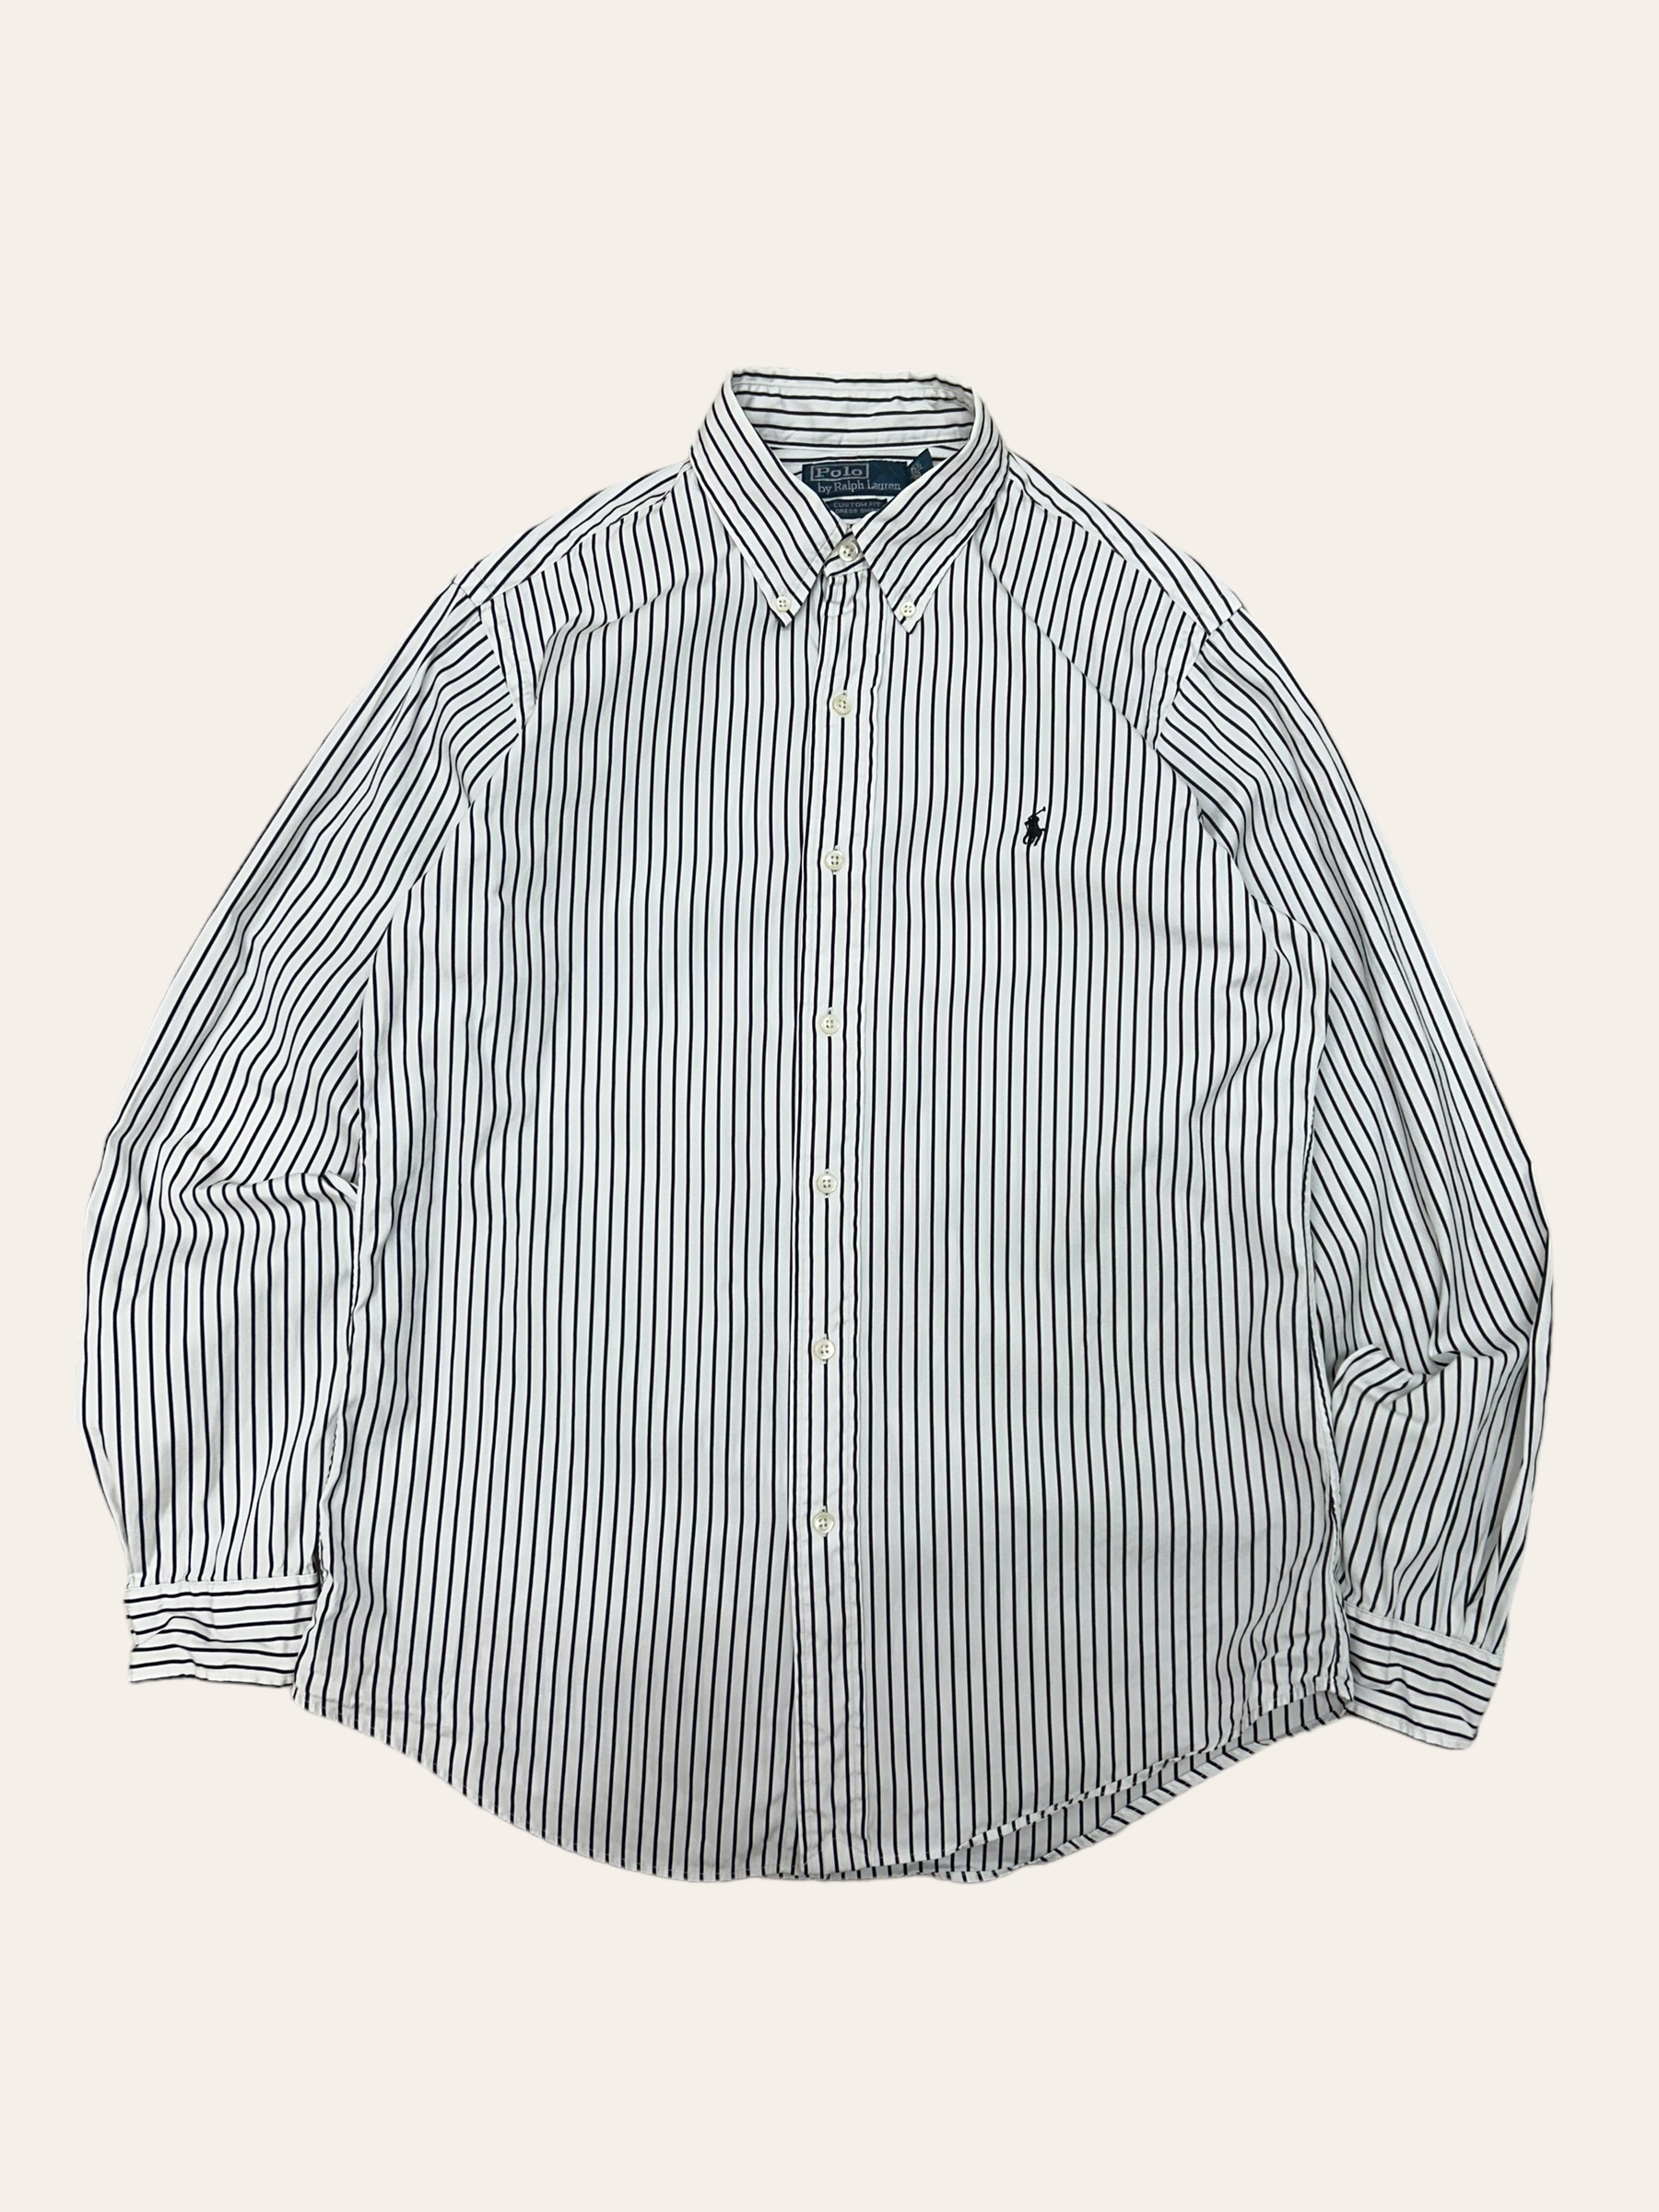 (From USA)Polo ralph lauren black stripe shirt 15.5